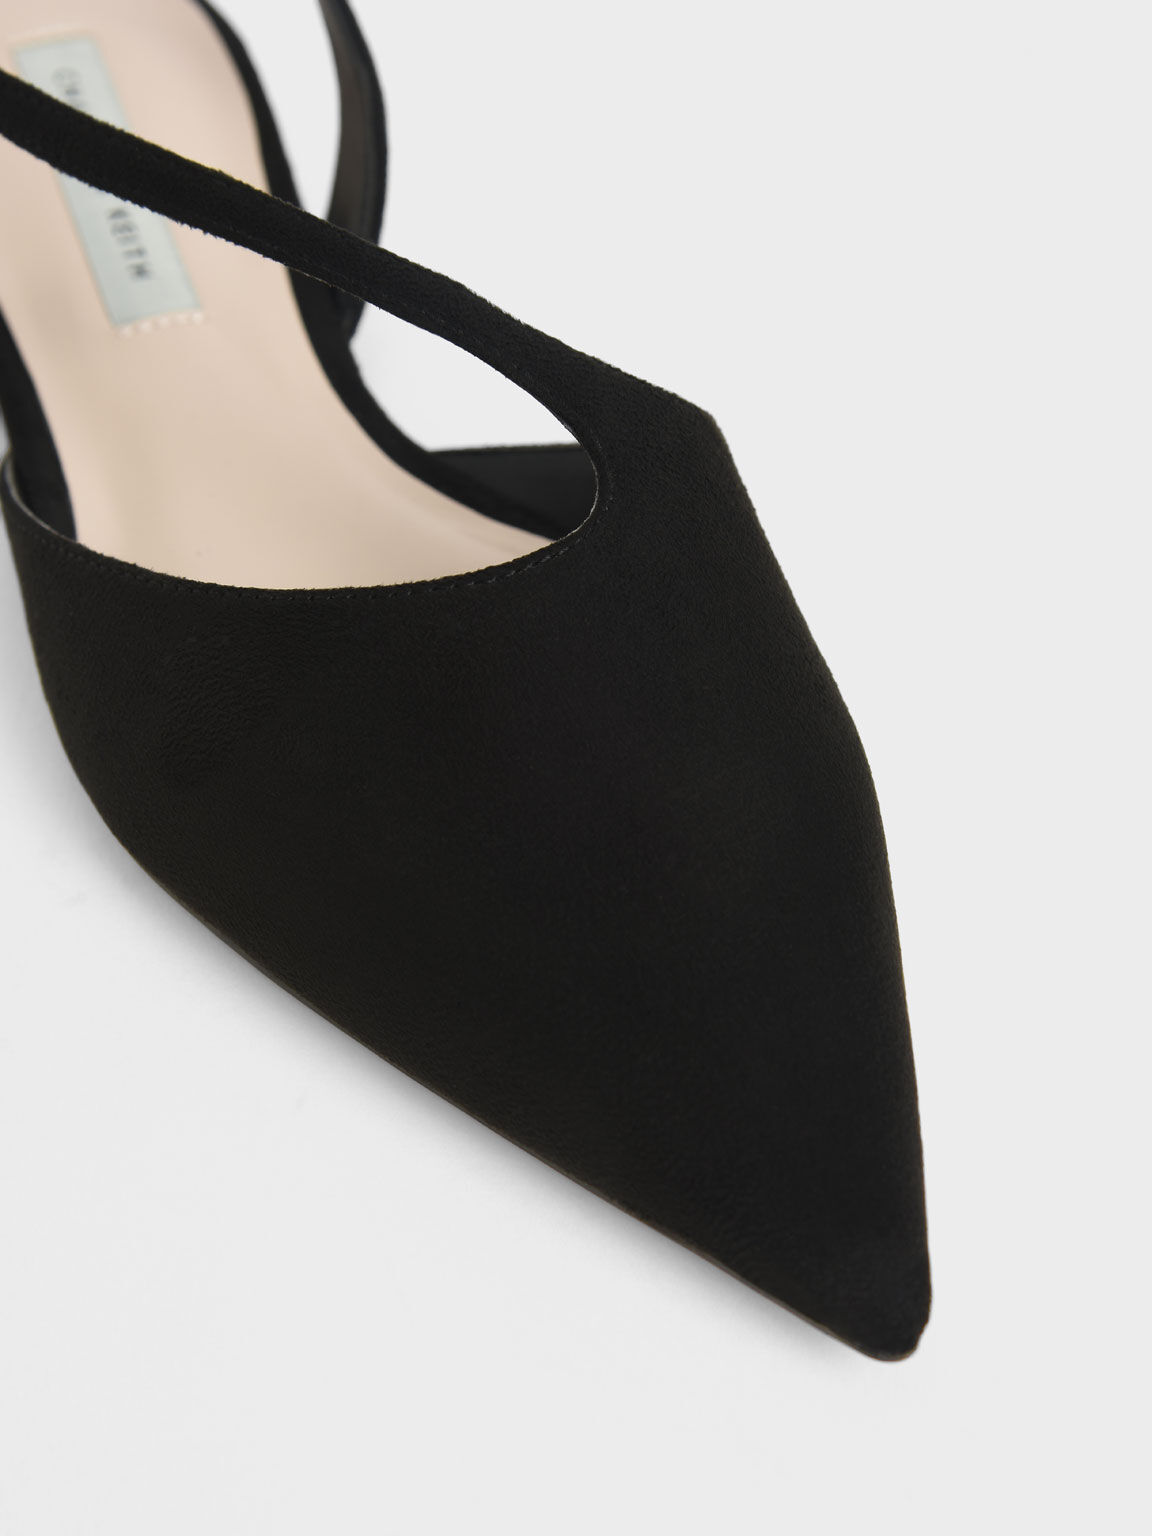 Sepatu Textured Pointed Toe Asymmetric Strap Ballerina Flats, Black Textured, hi-res